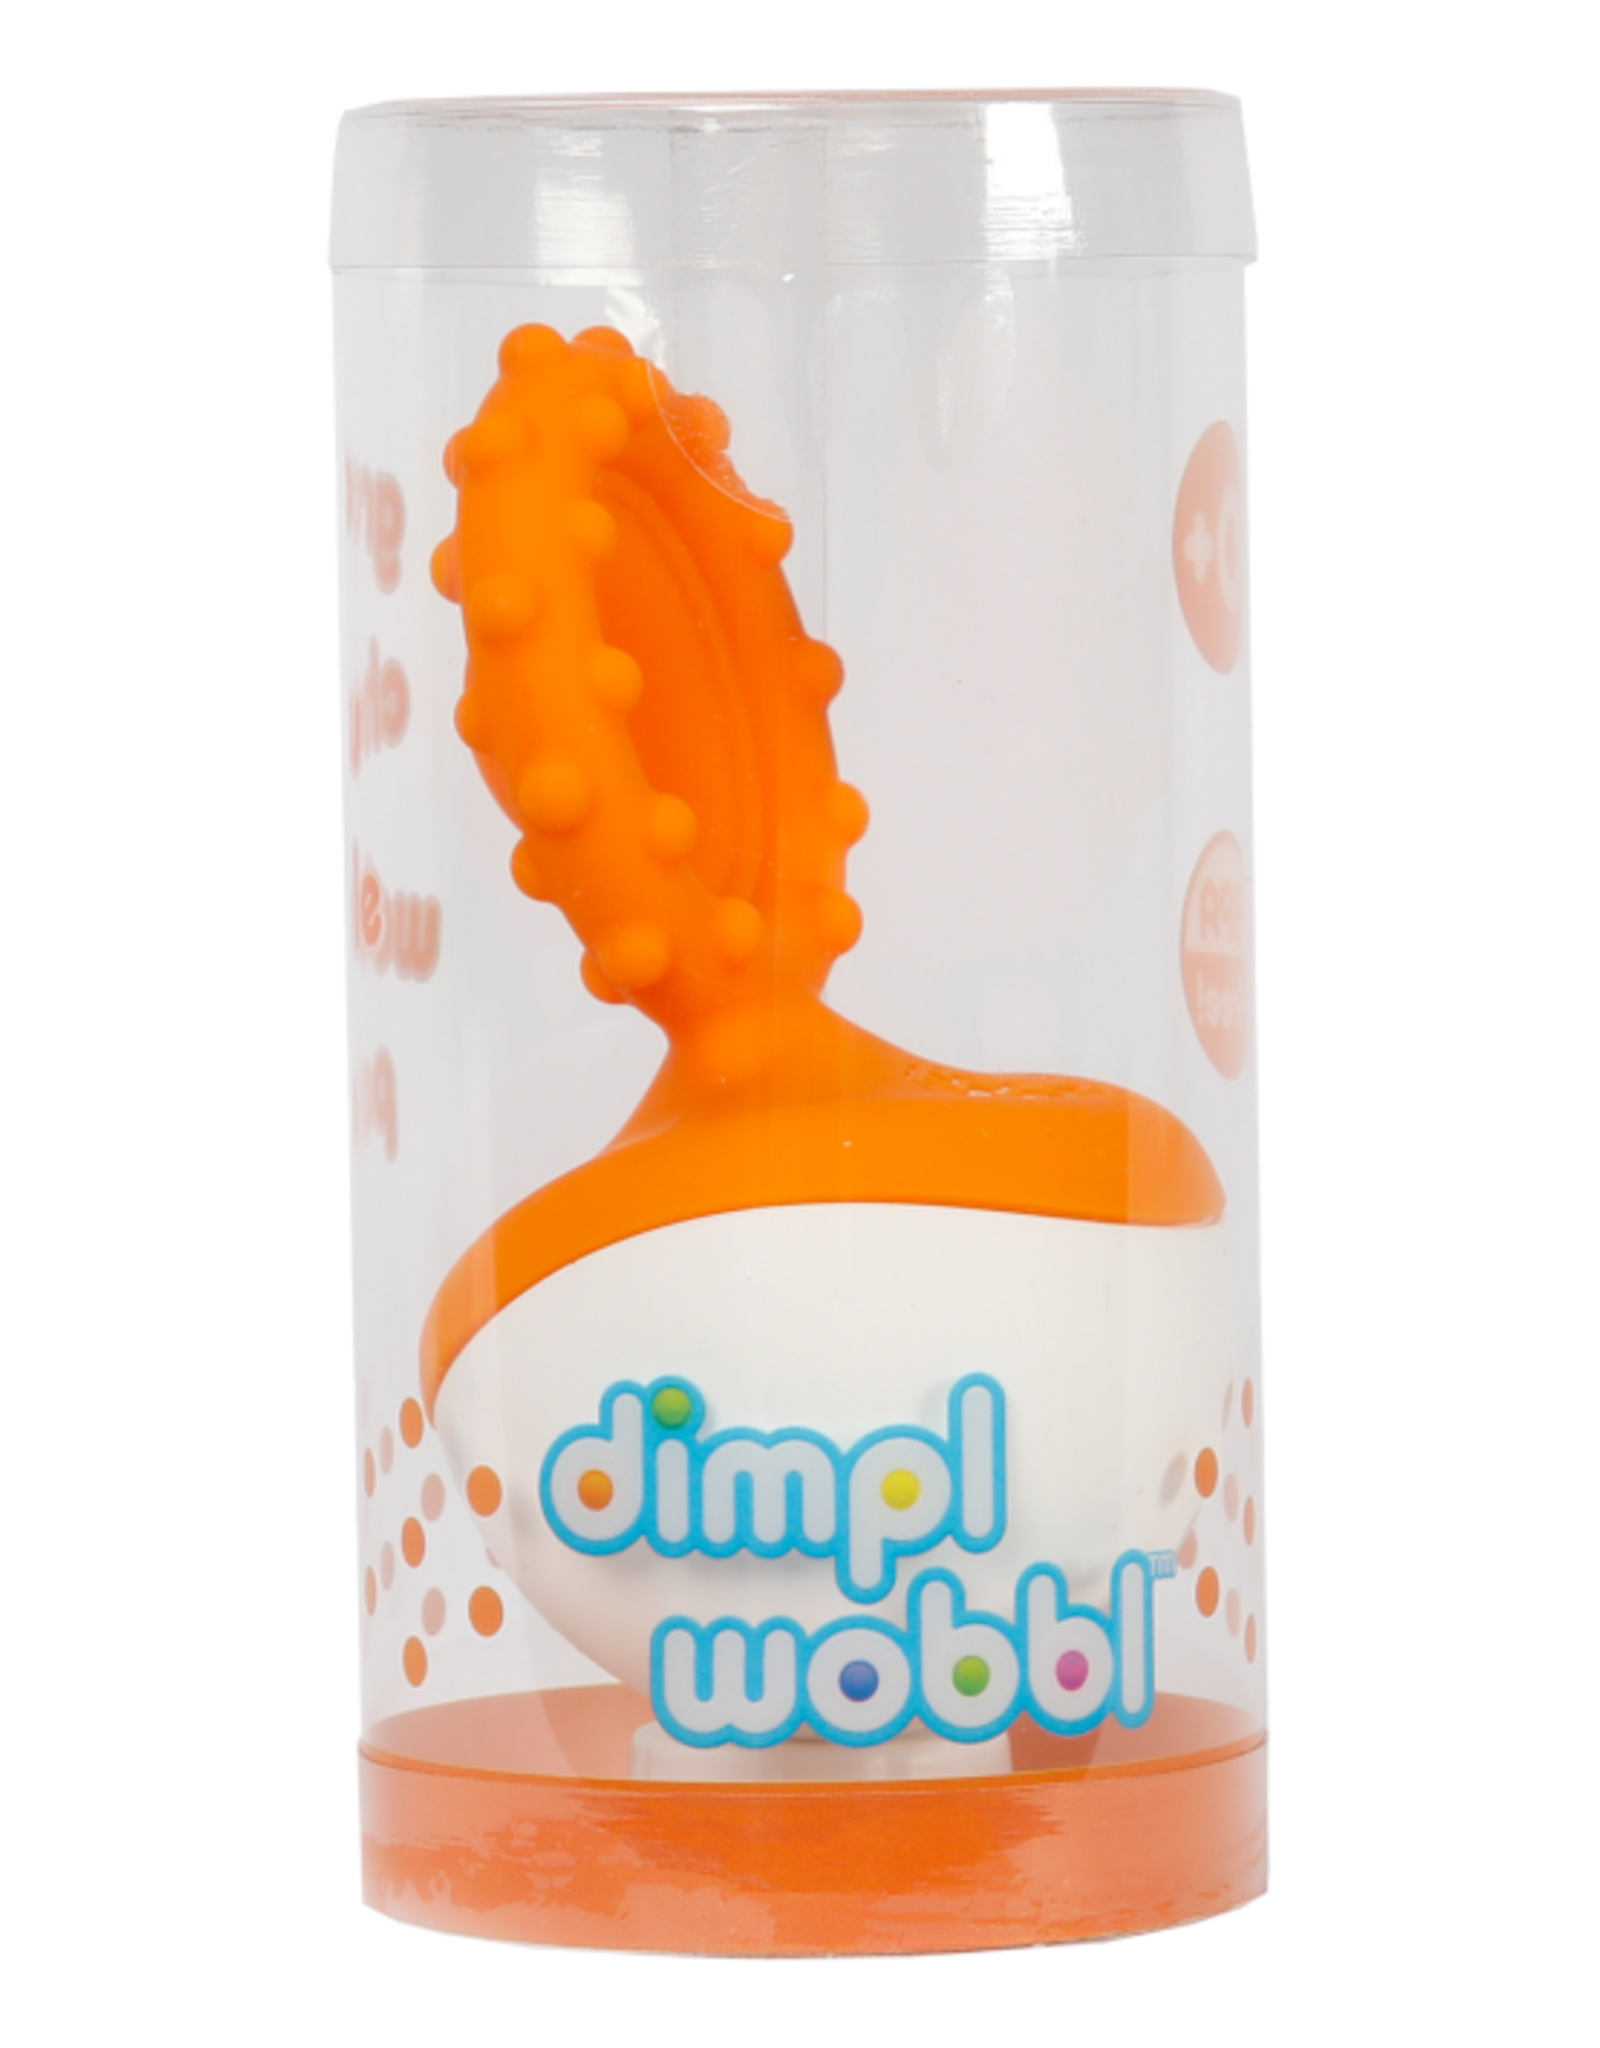 Fat Brain Toy Co. Fat Brain Toys - Dimpl Wobbl